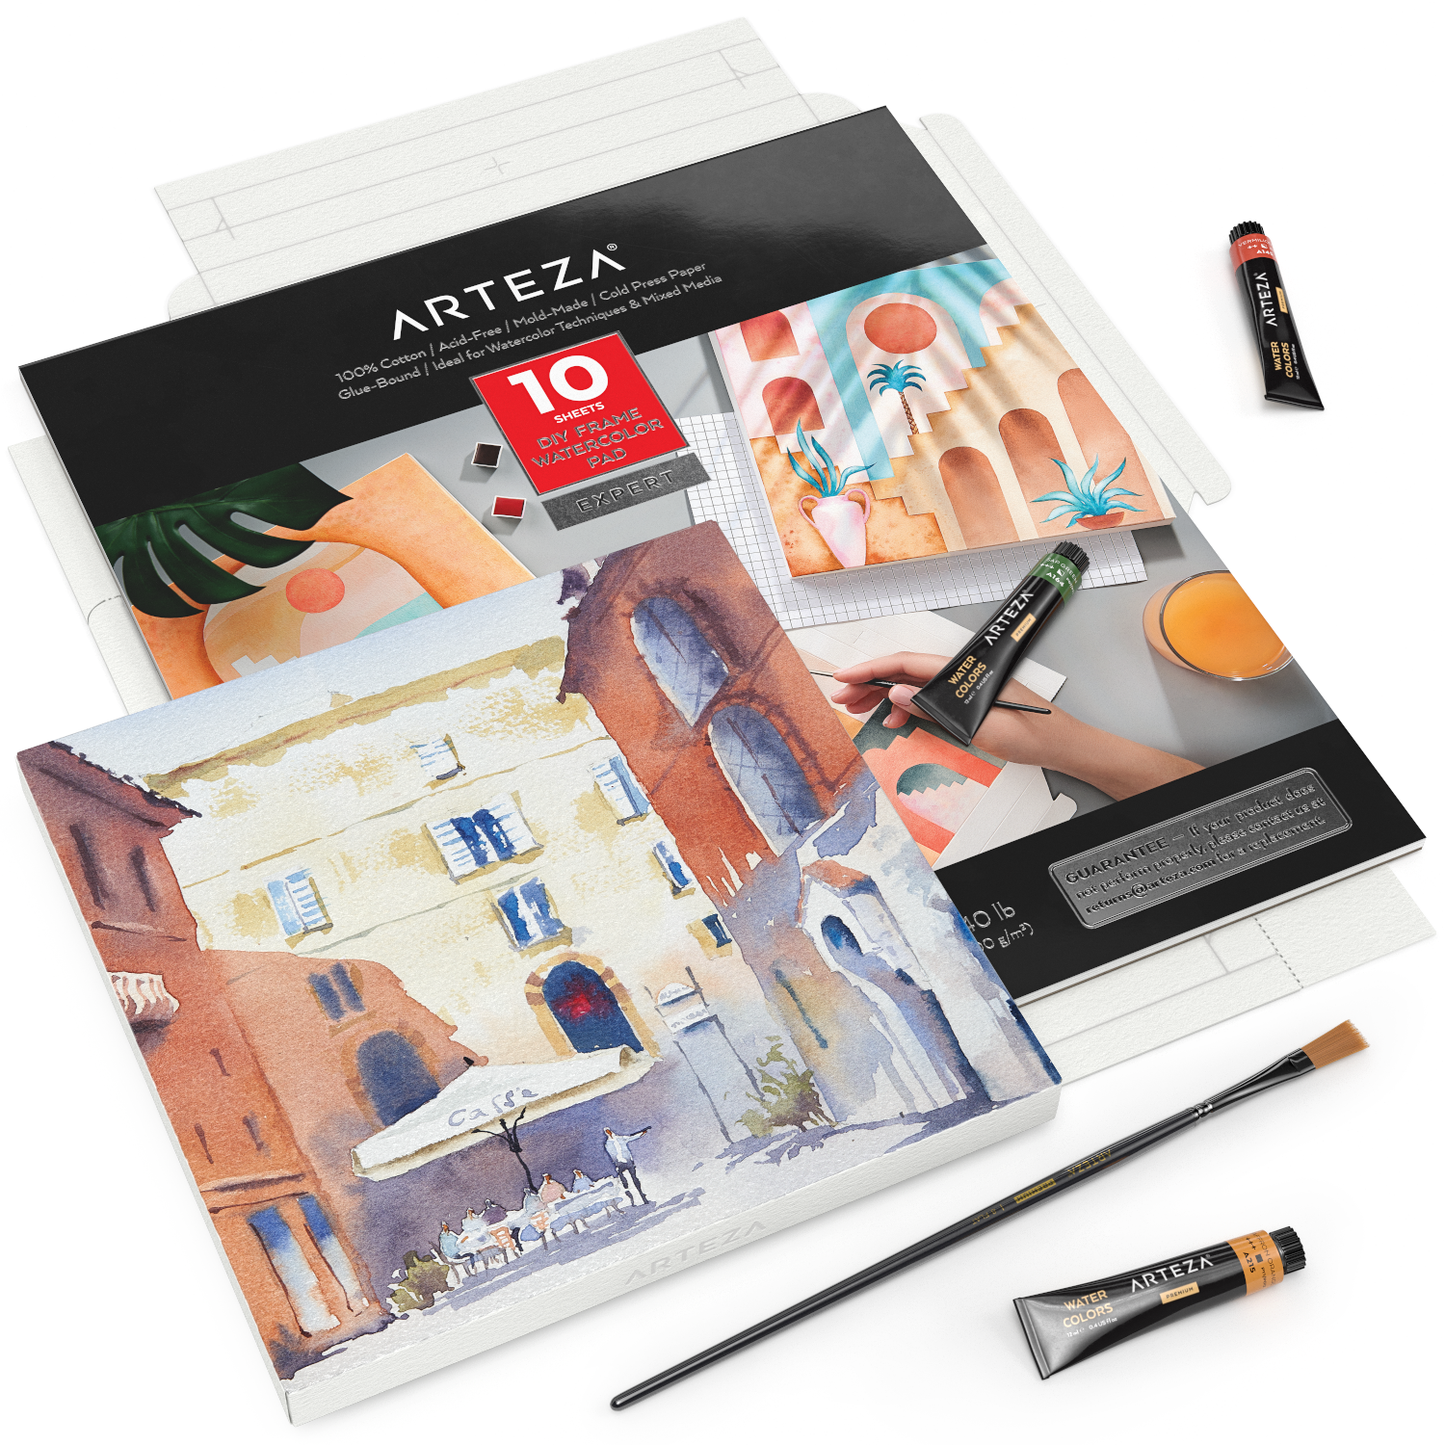 Arteza Watercolor Painting Art Set, Real Brush Pens 24 and Foldable Canvas Paper (ARTZ-3565)